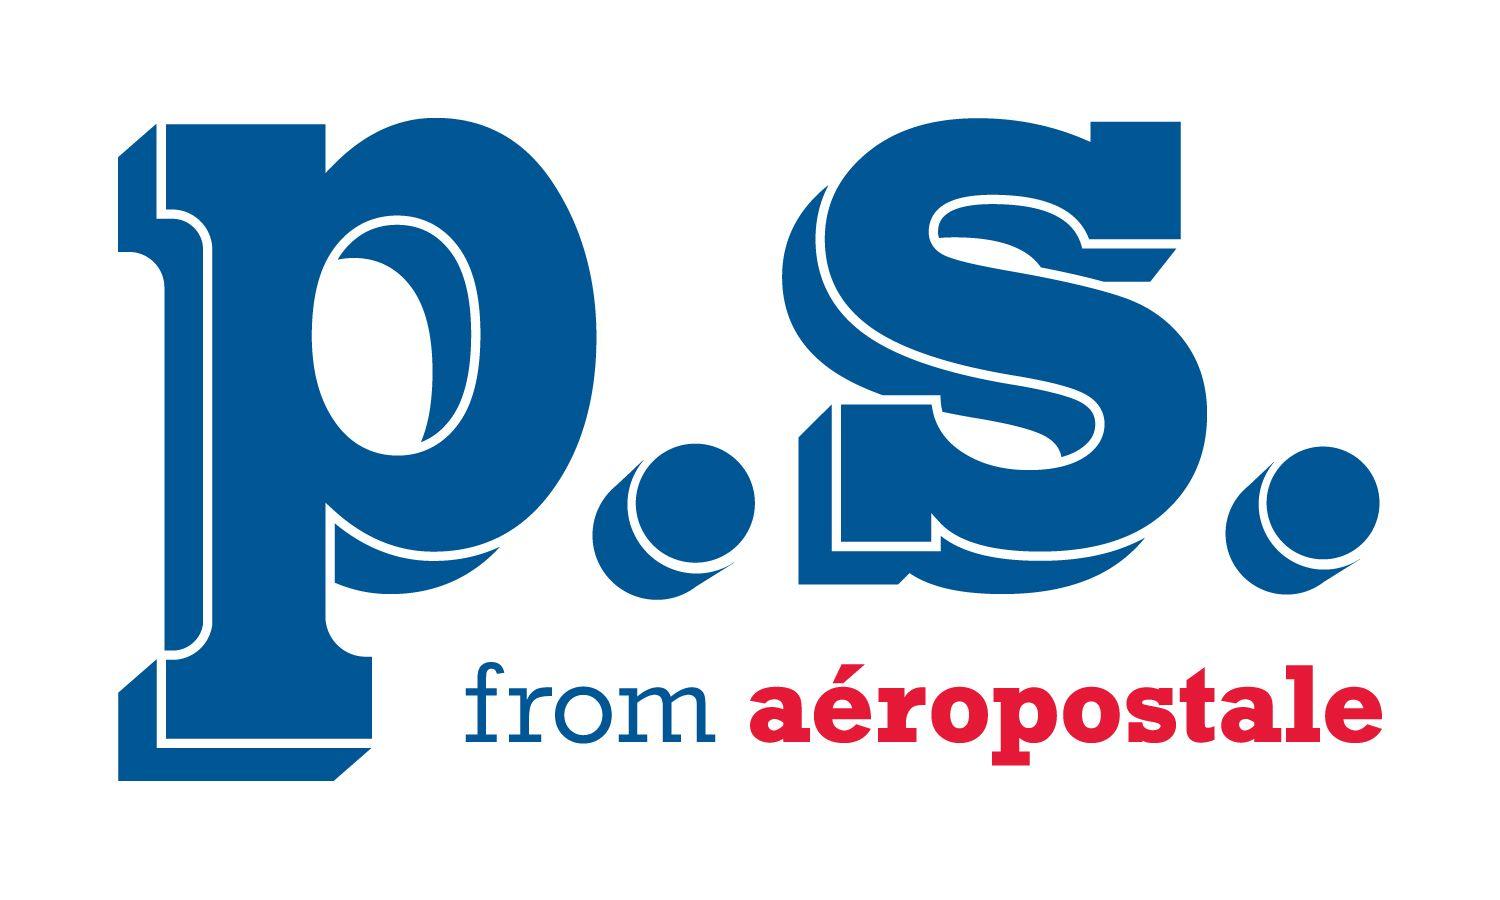 Aeropostale Logo - Image - P.S. from Aeropostale logo.jpg | Logofanonpedia | FANDOM ...